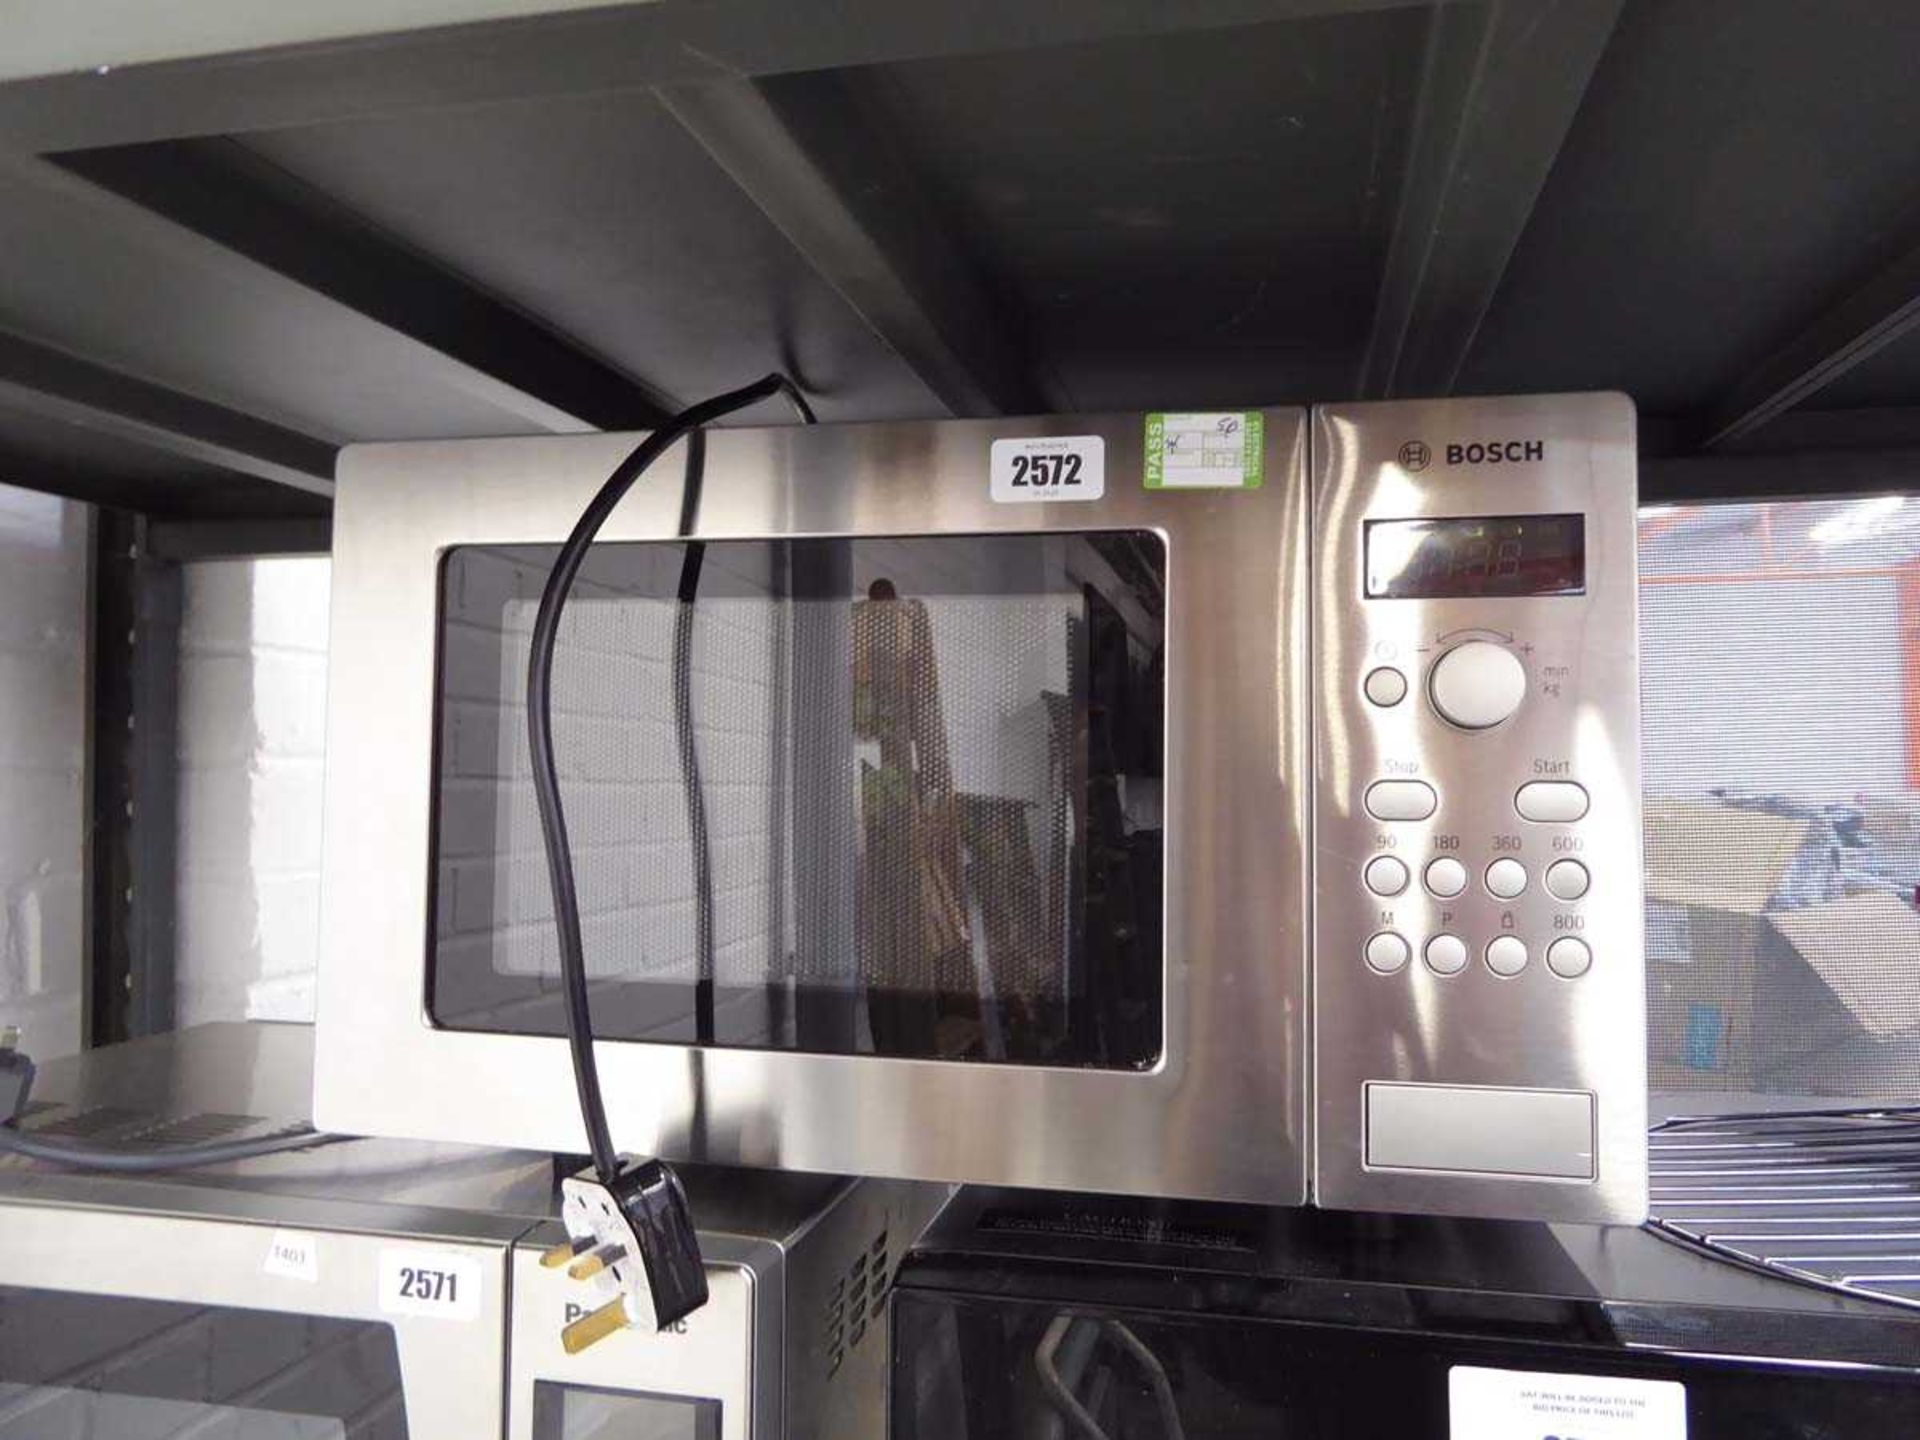 Bosch digital microwave